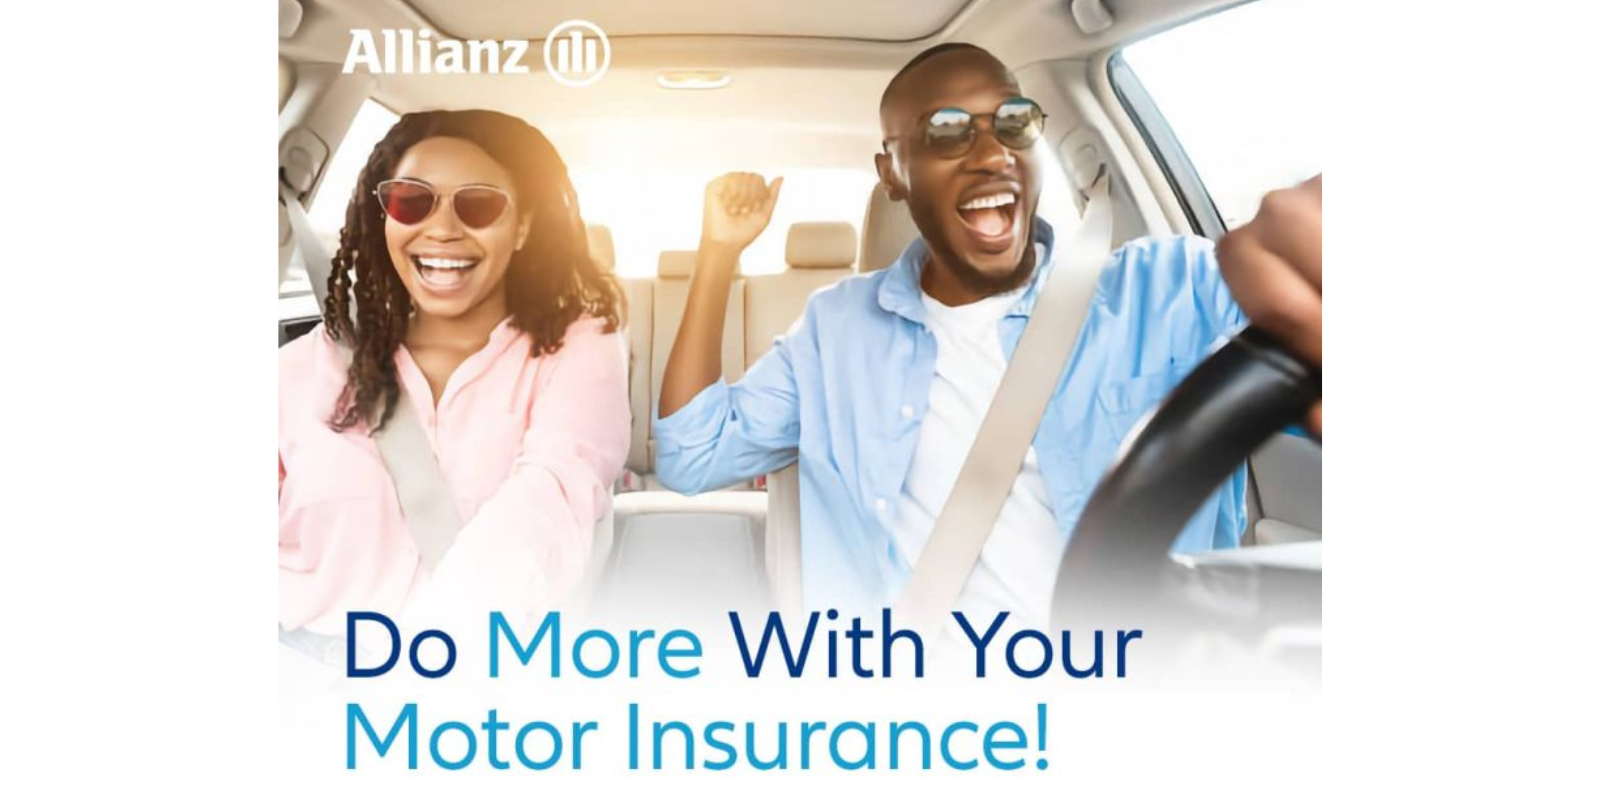 Allianz Motor Insurance 